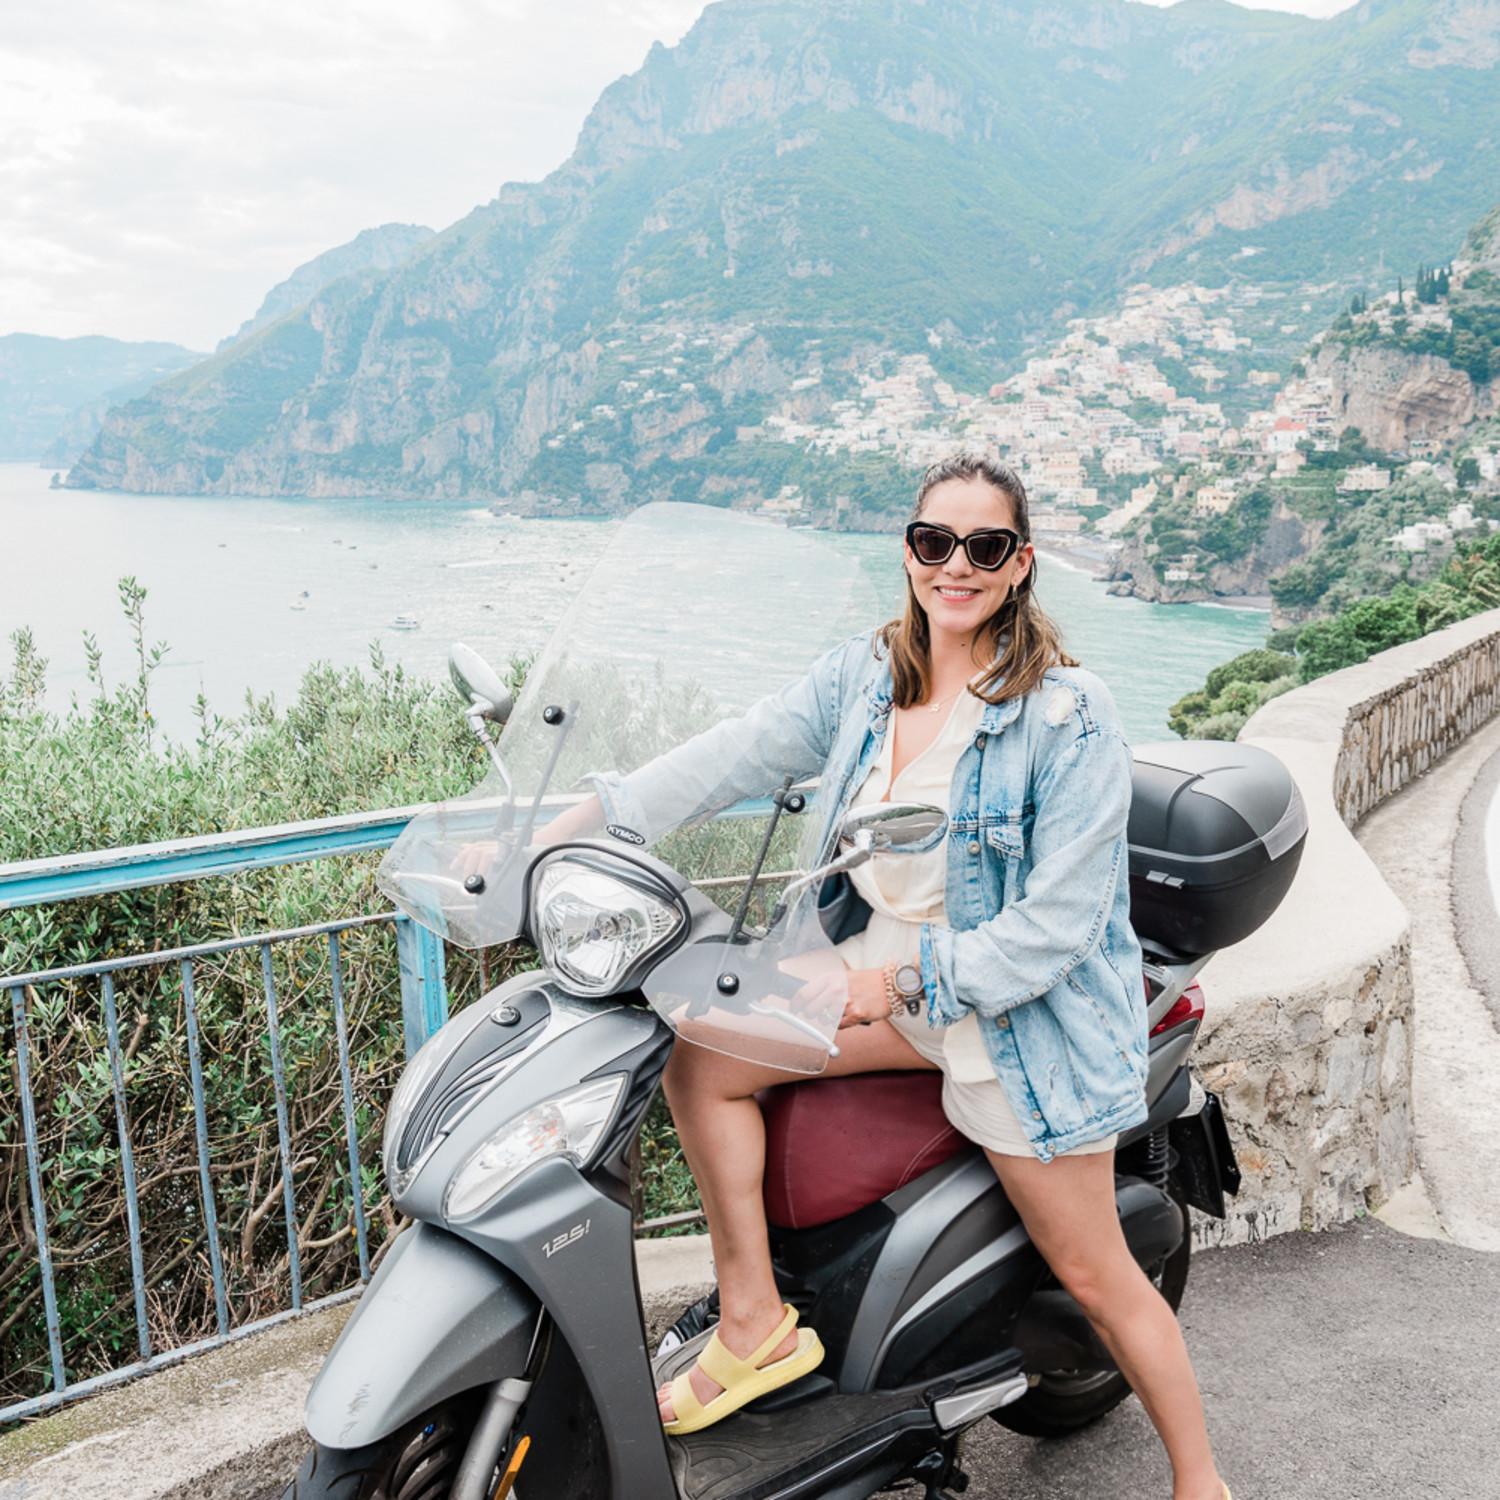 Discover Italy through motorcycling.